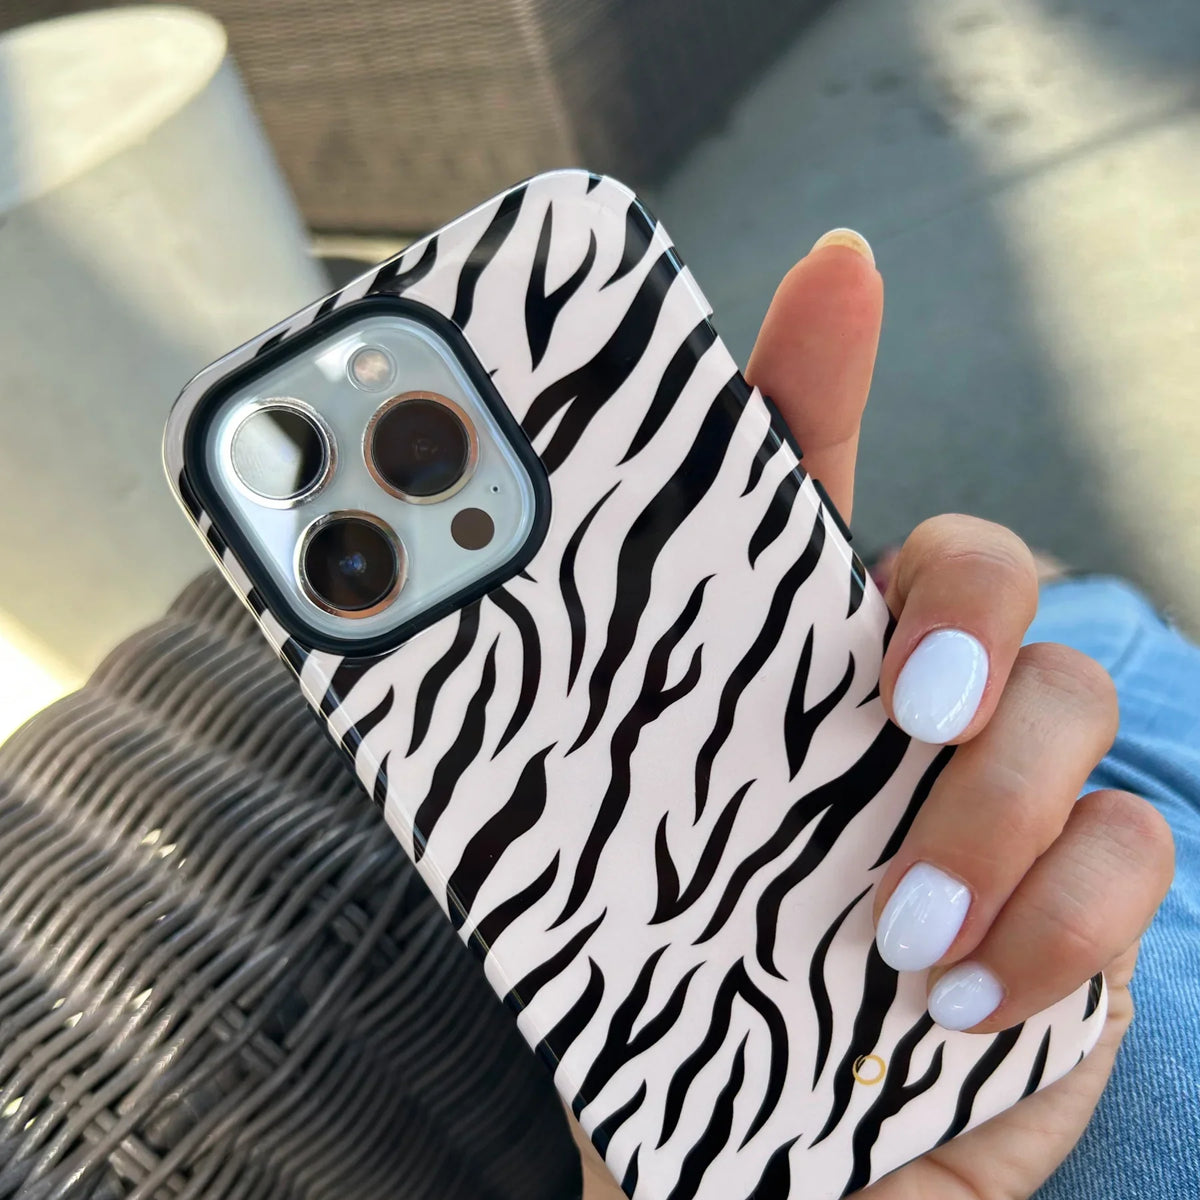 Zebra iPhone Case - Select a Device